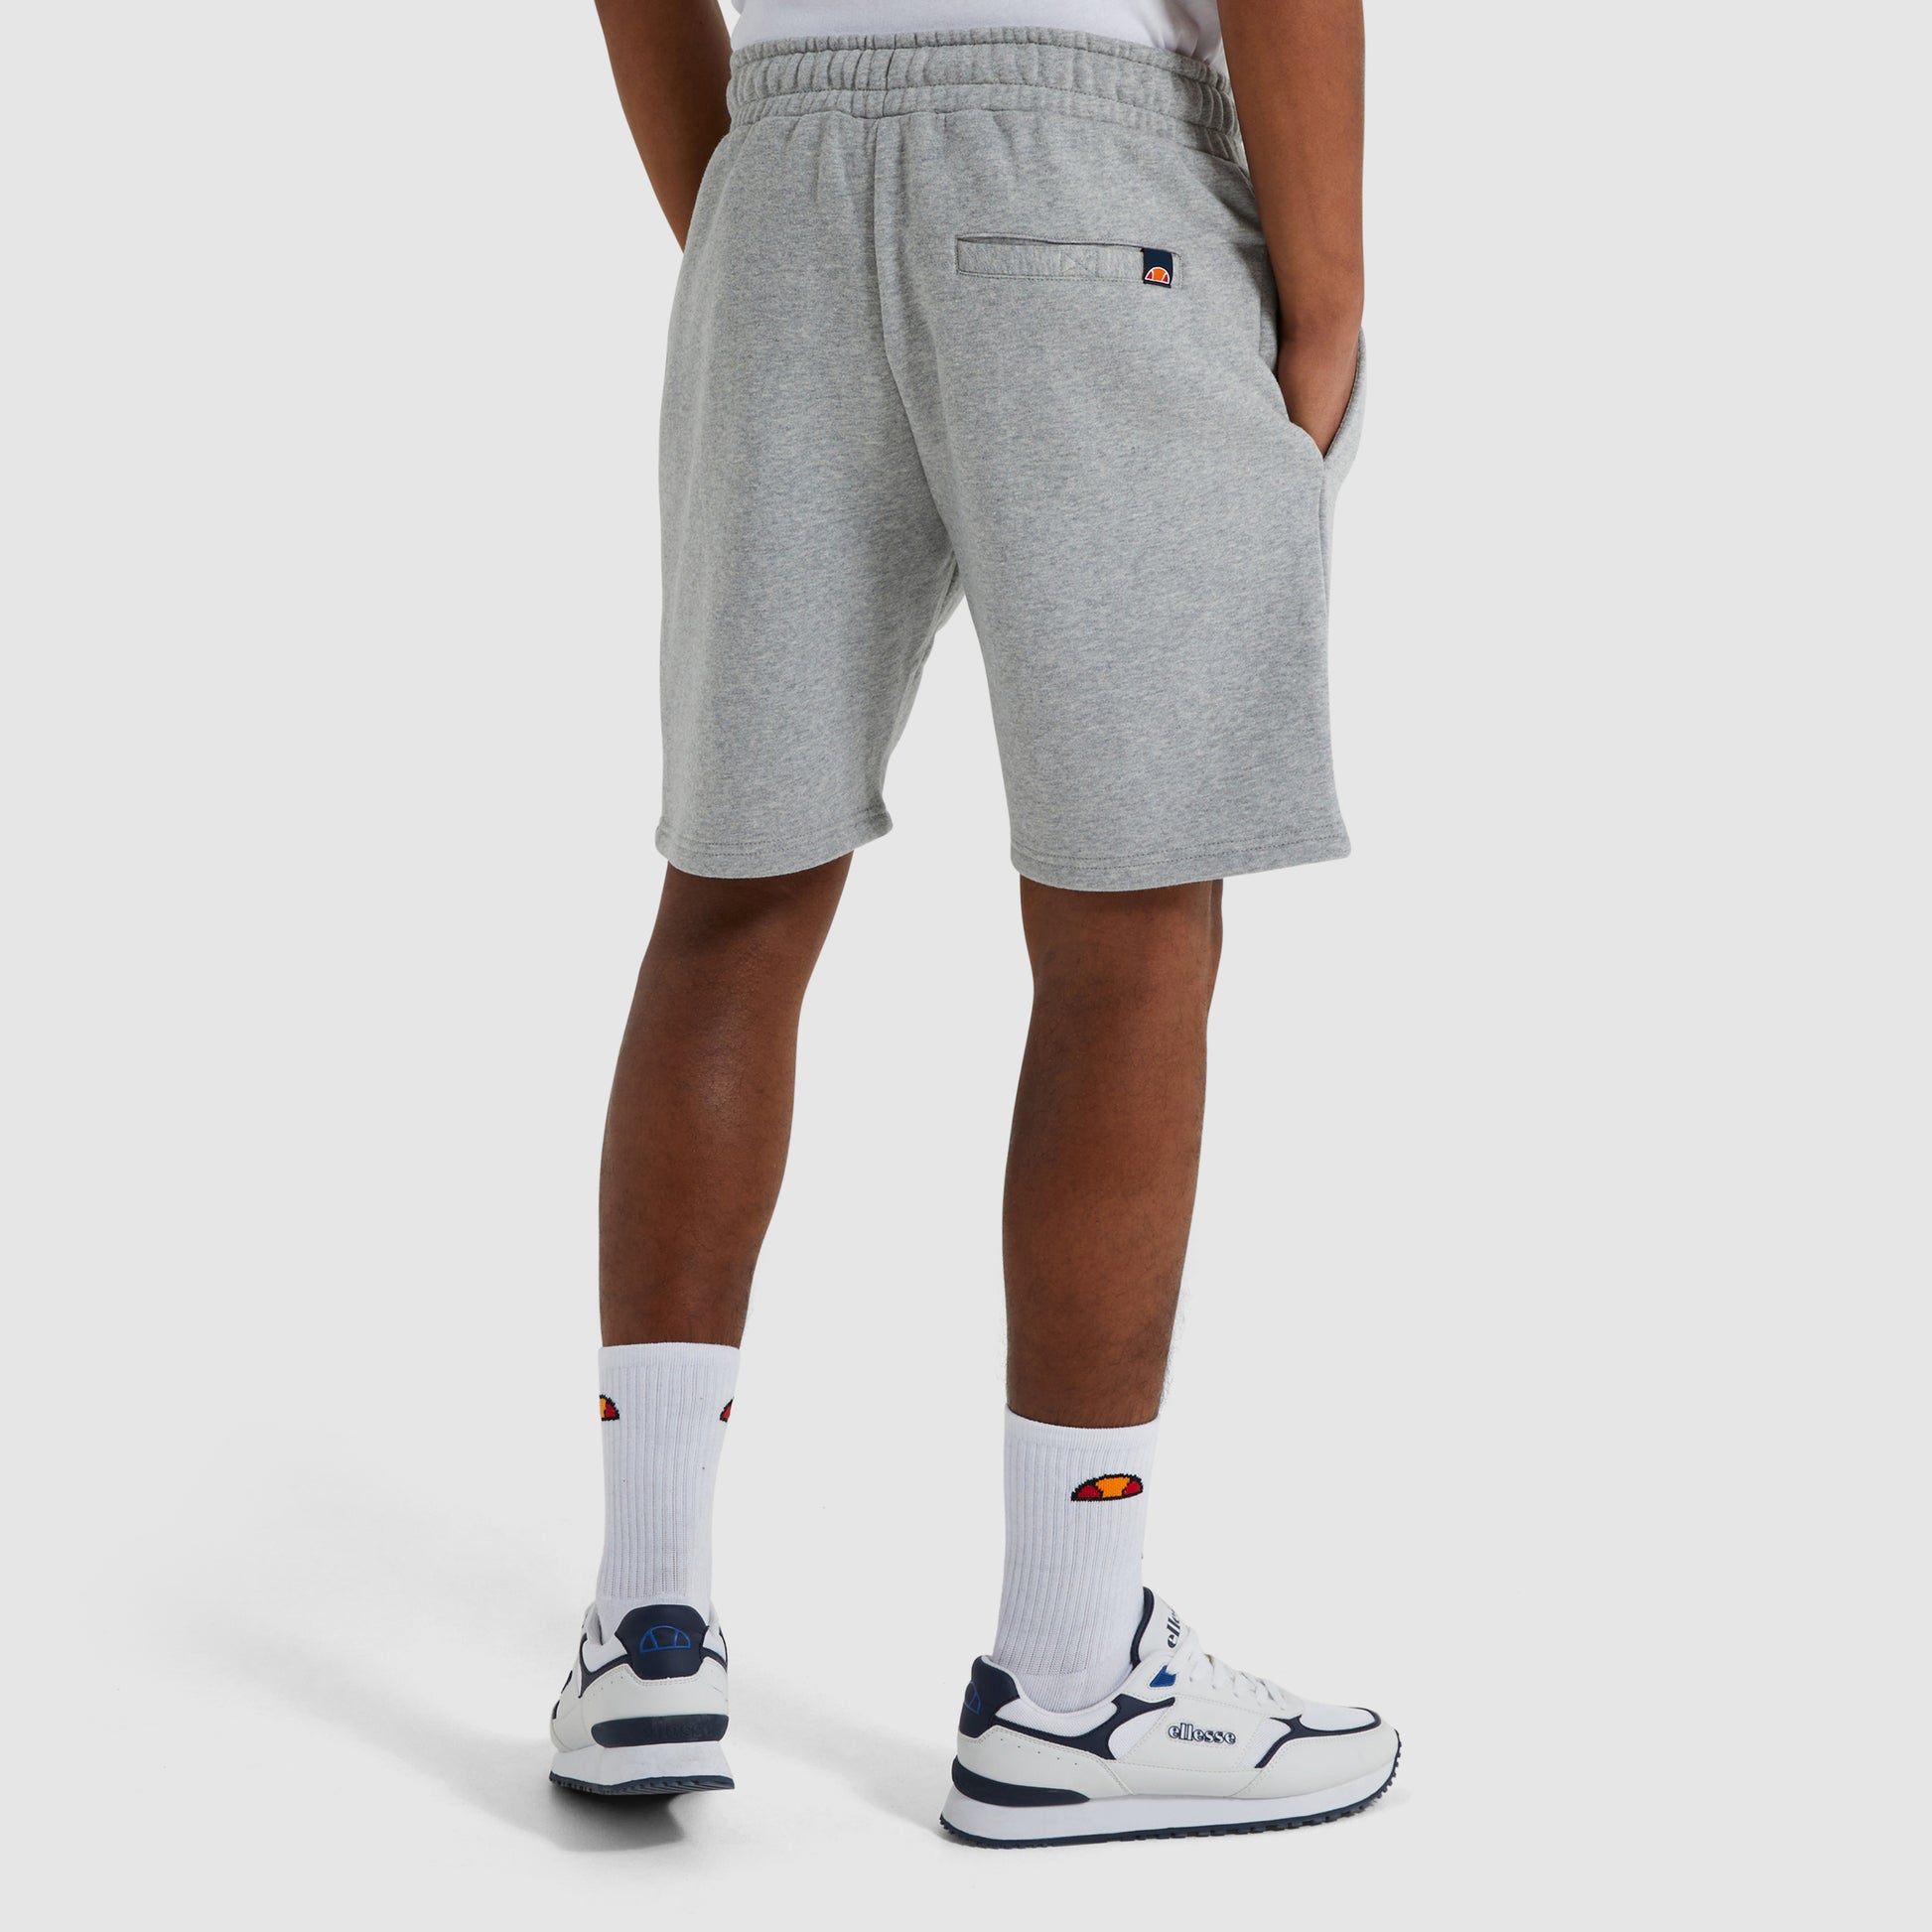 ellesse Tennis Men\'s Sweat Shorts – NewCo Brands | Sportshorts